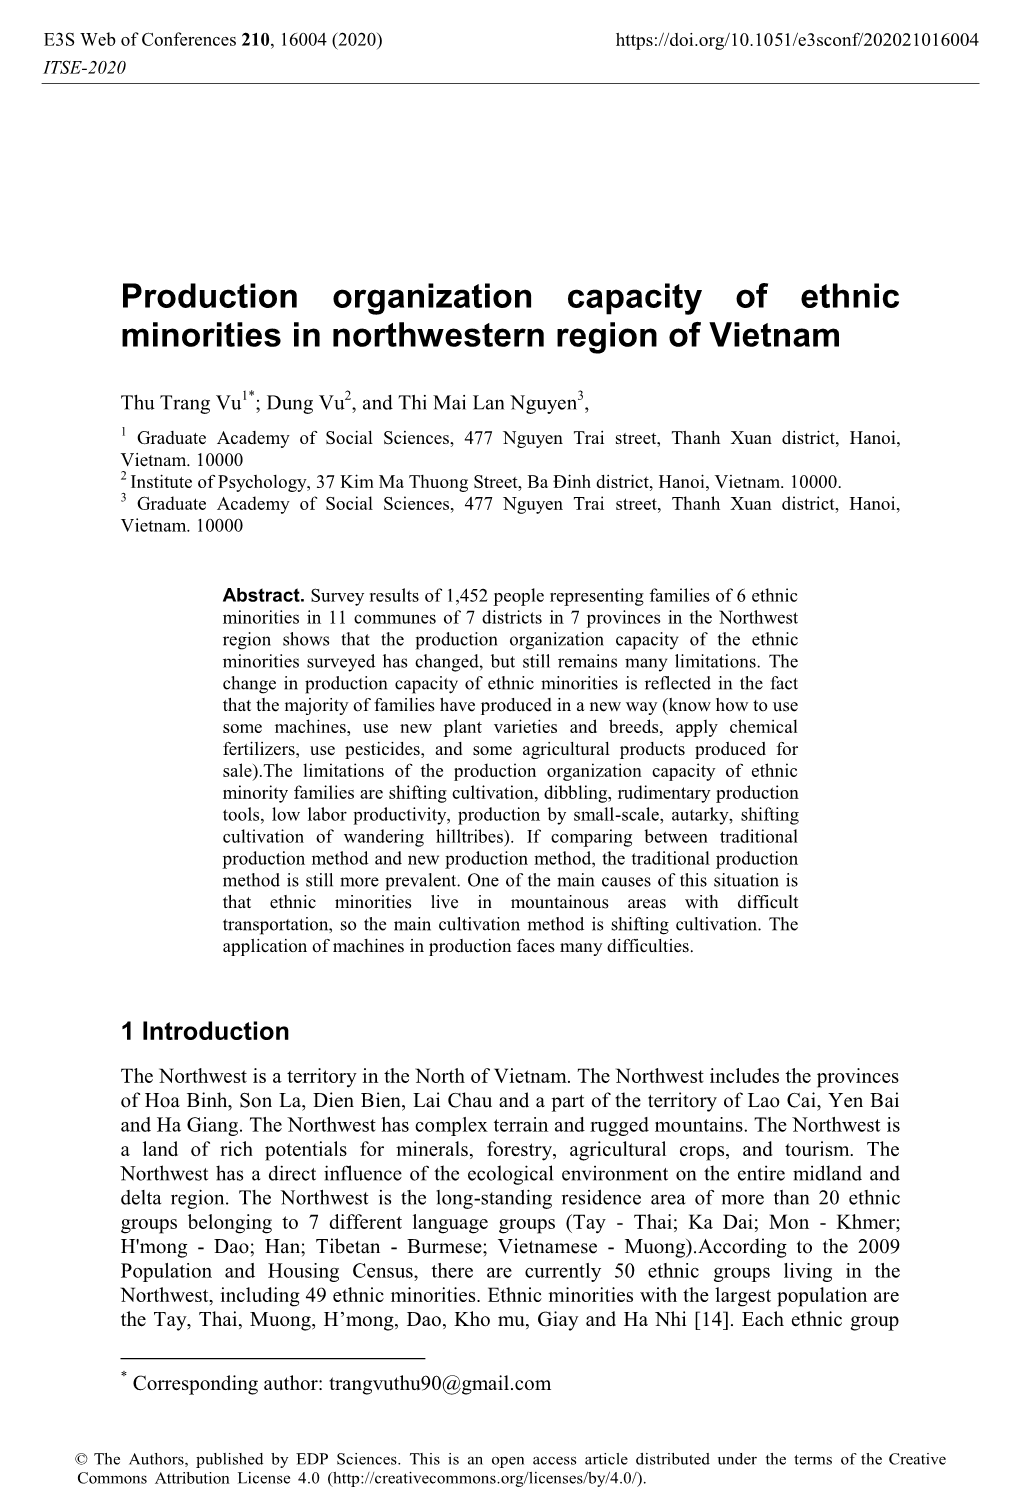 Production Organization Capacity of Ethnic Minorities in Northwestern Region of Vietnam